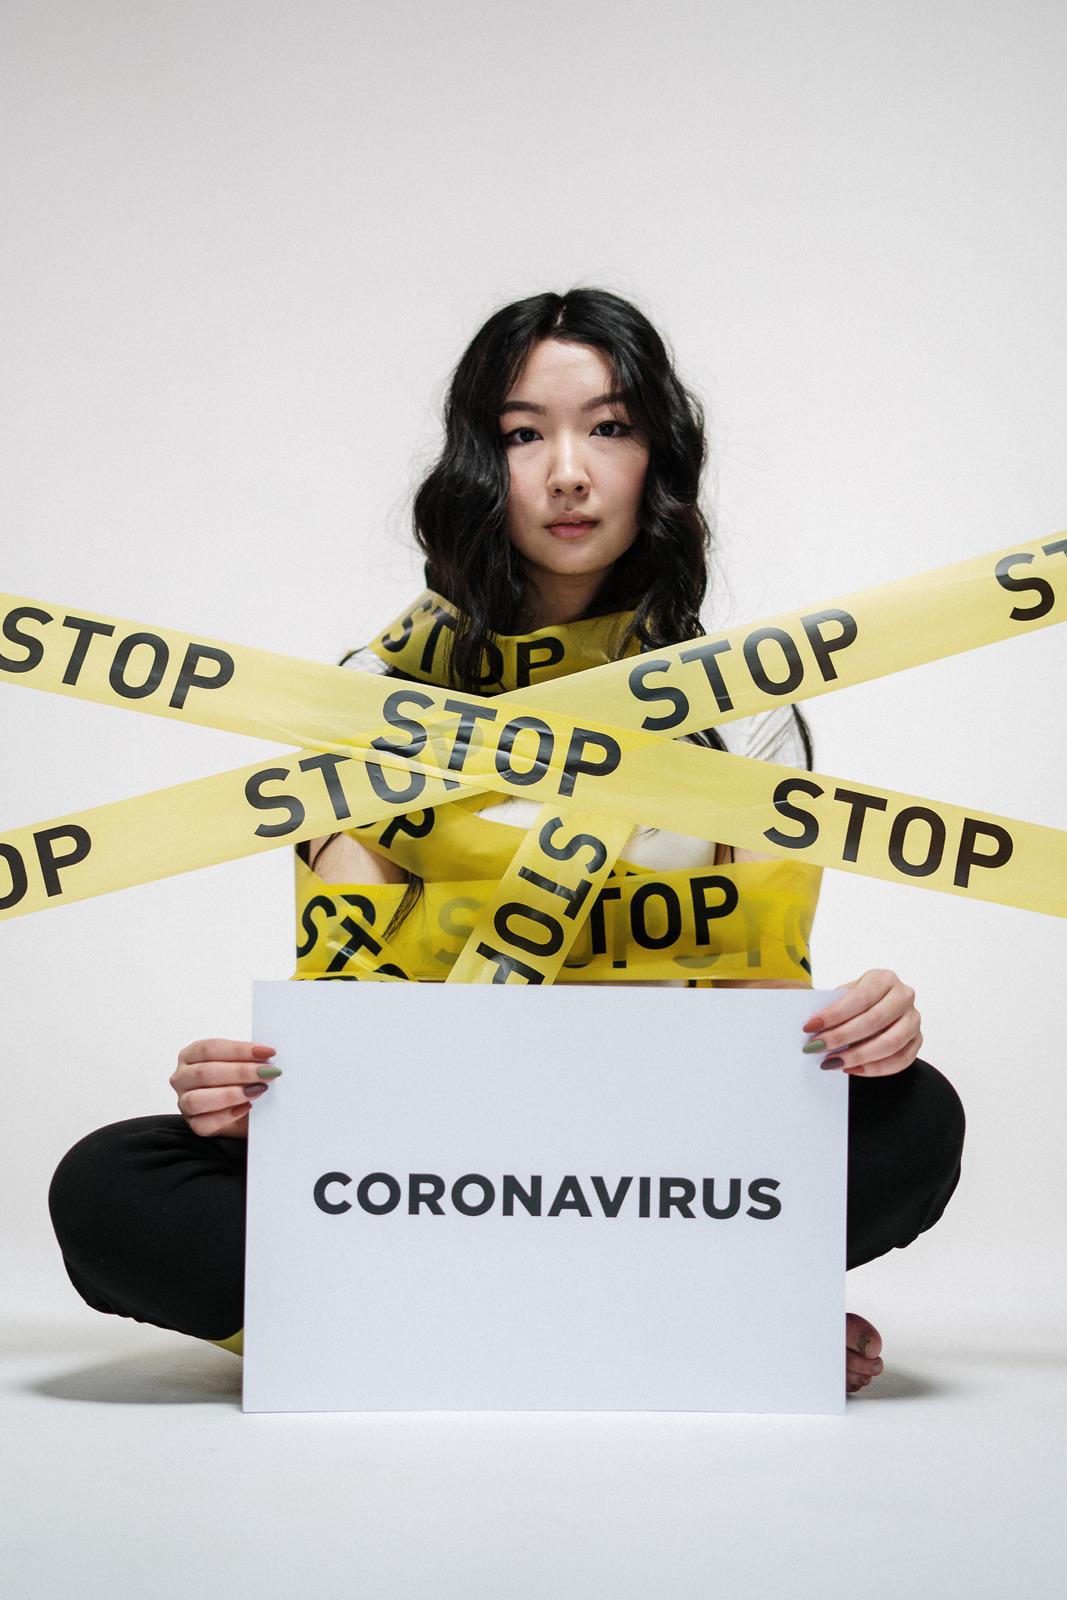 Coronavirus/ Covid 19